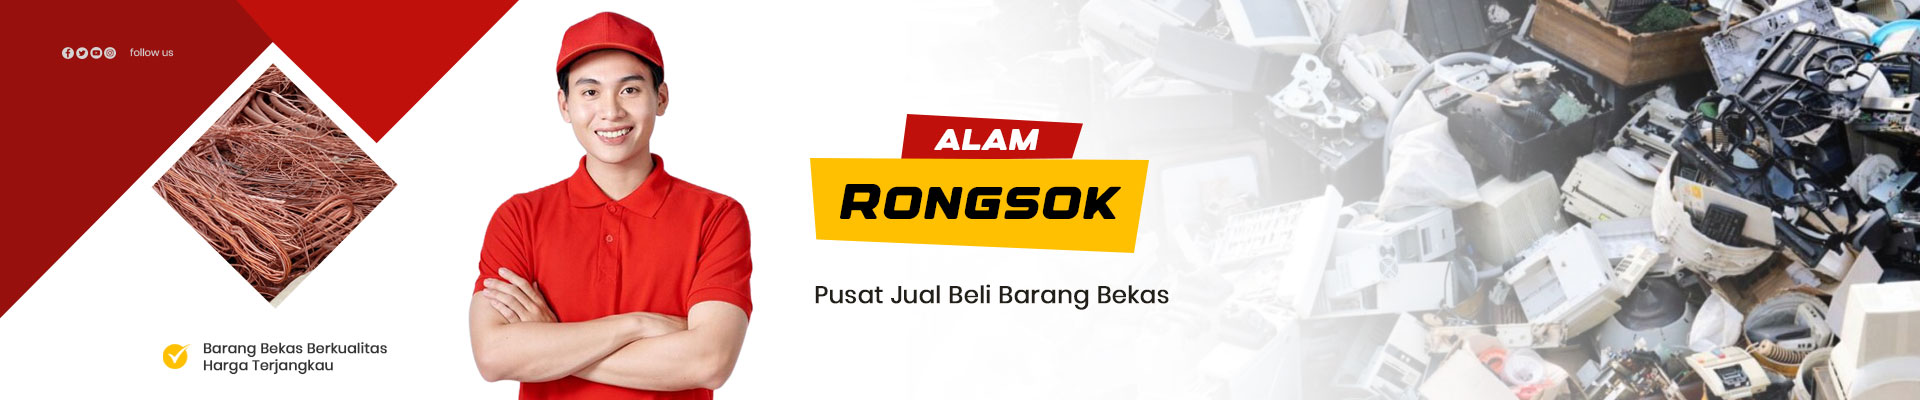 Alam-Rongsok-Title-Desk